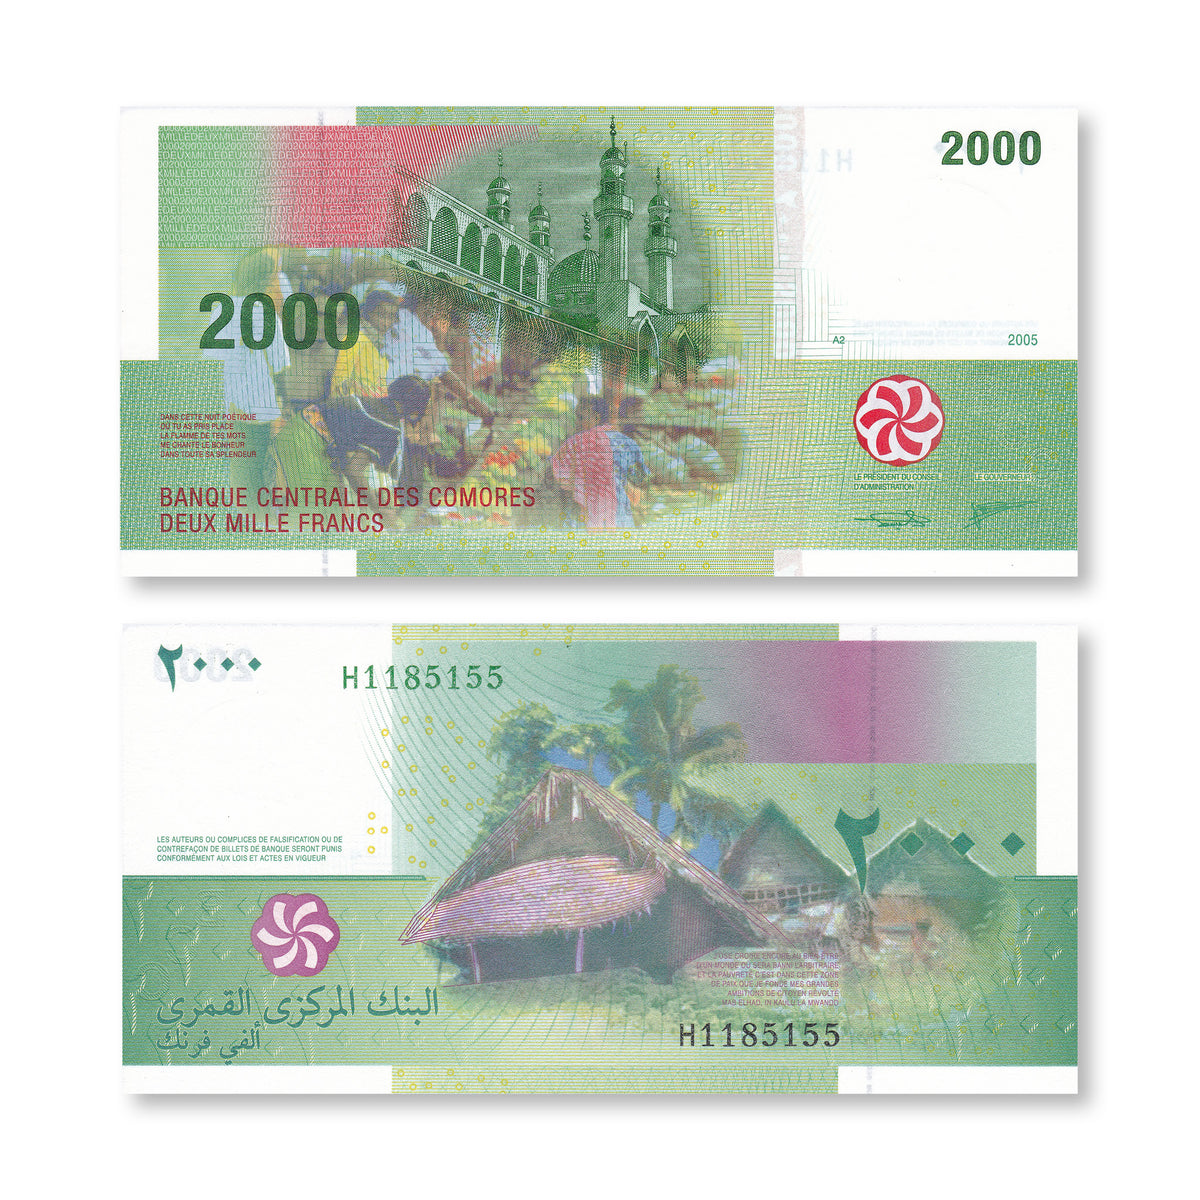 Comoros 2000 Francs, 2005 (2020), B308c, P17, UNC - Robert's World Money - World Banknotes